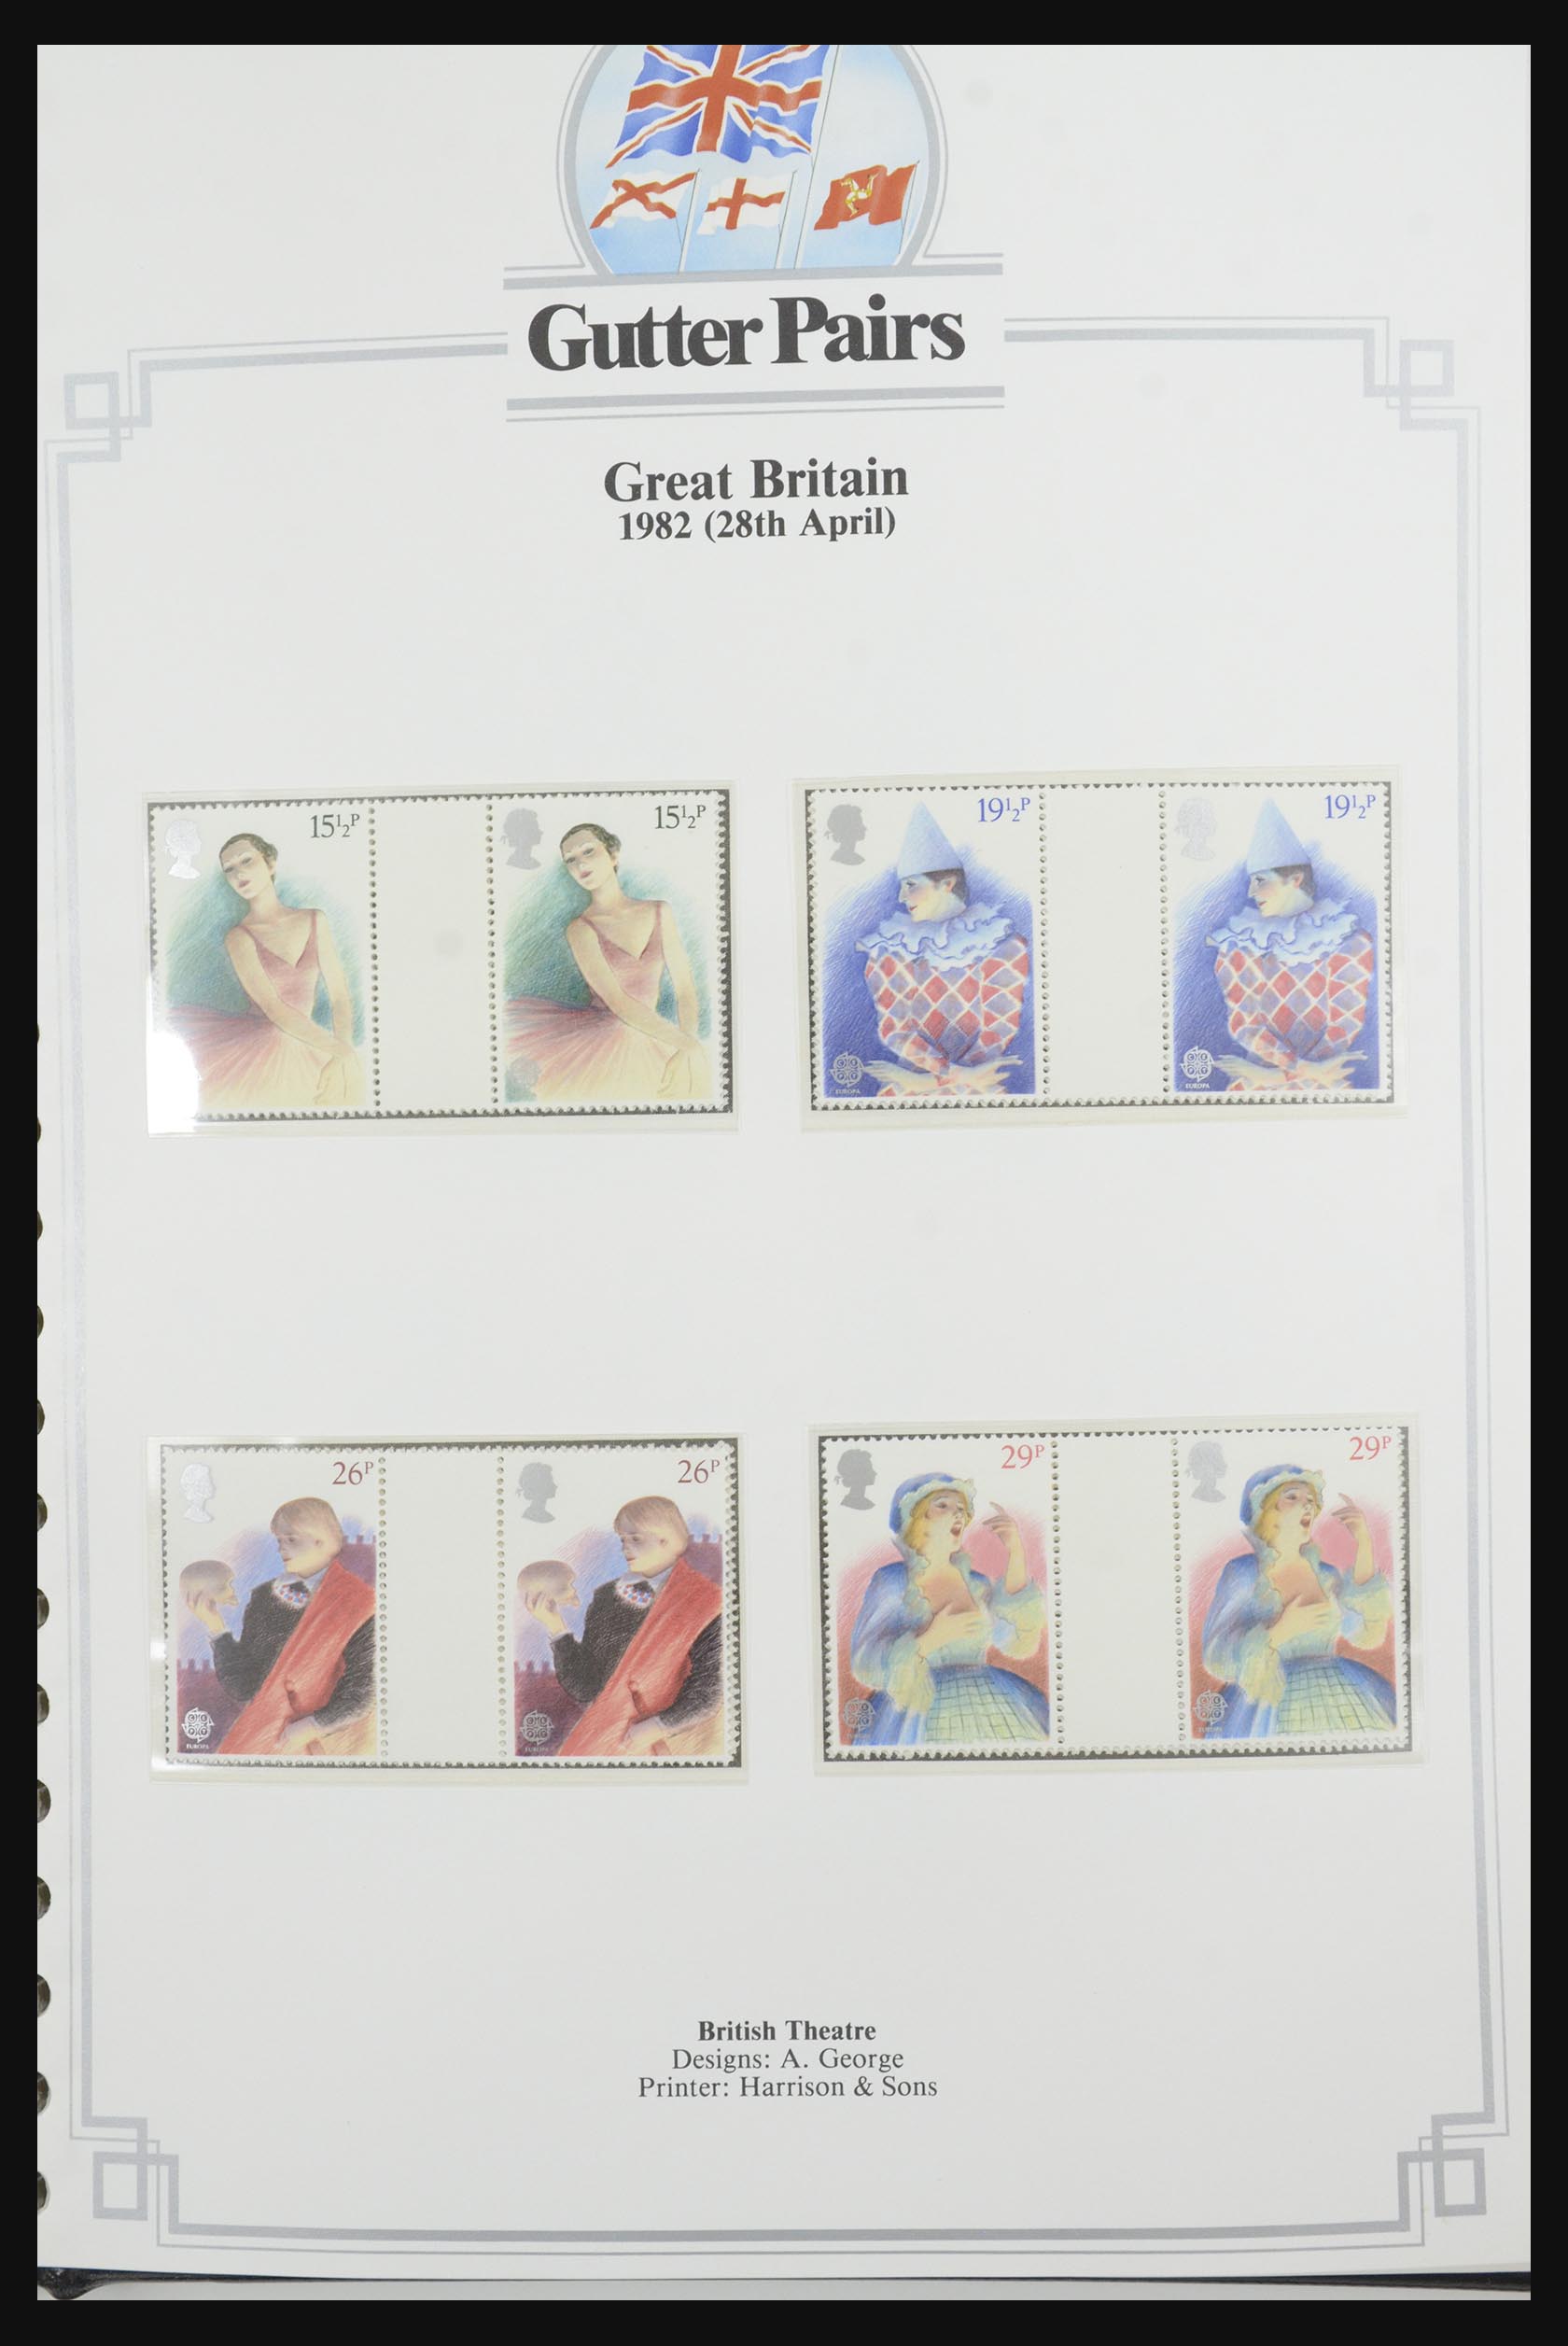 31717 029 - 31717 Great Britain gutterpairs 1976-1991.